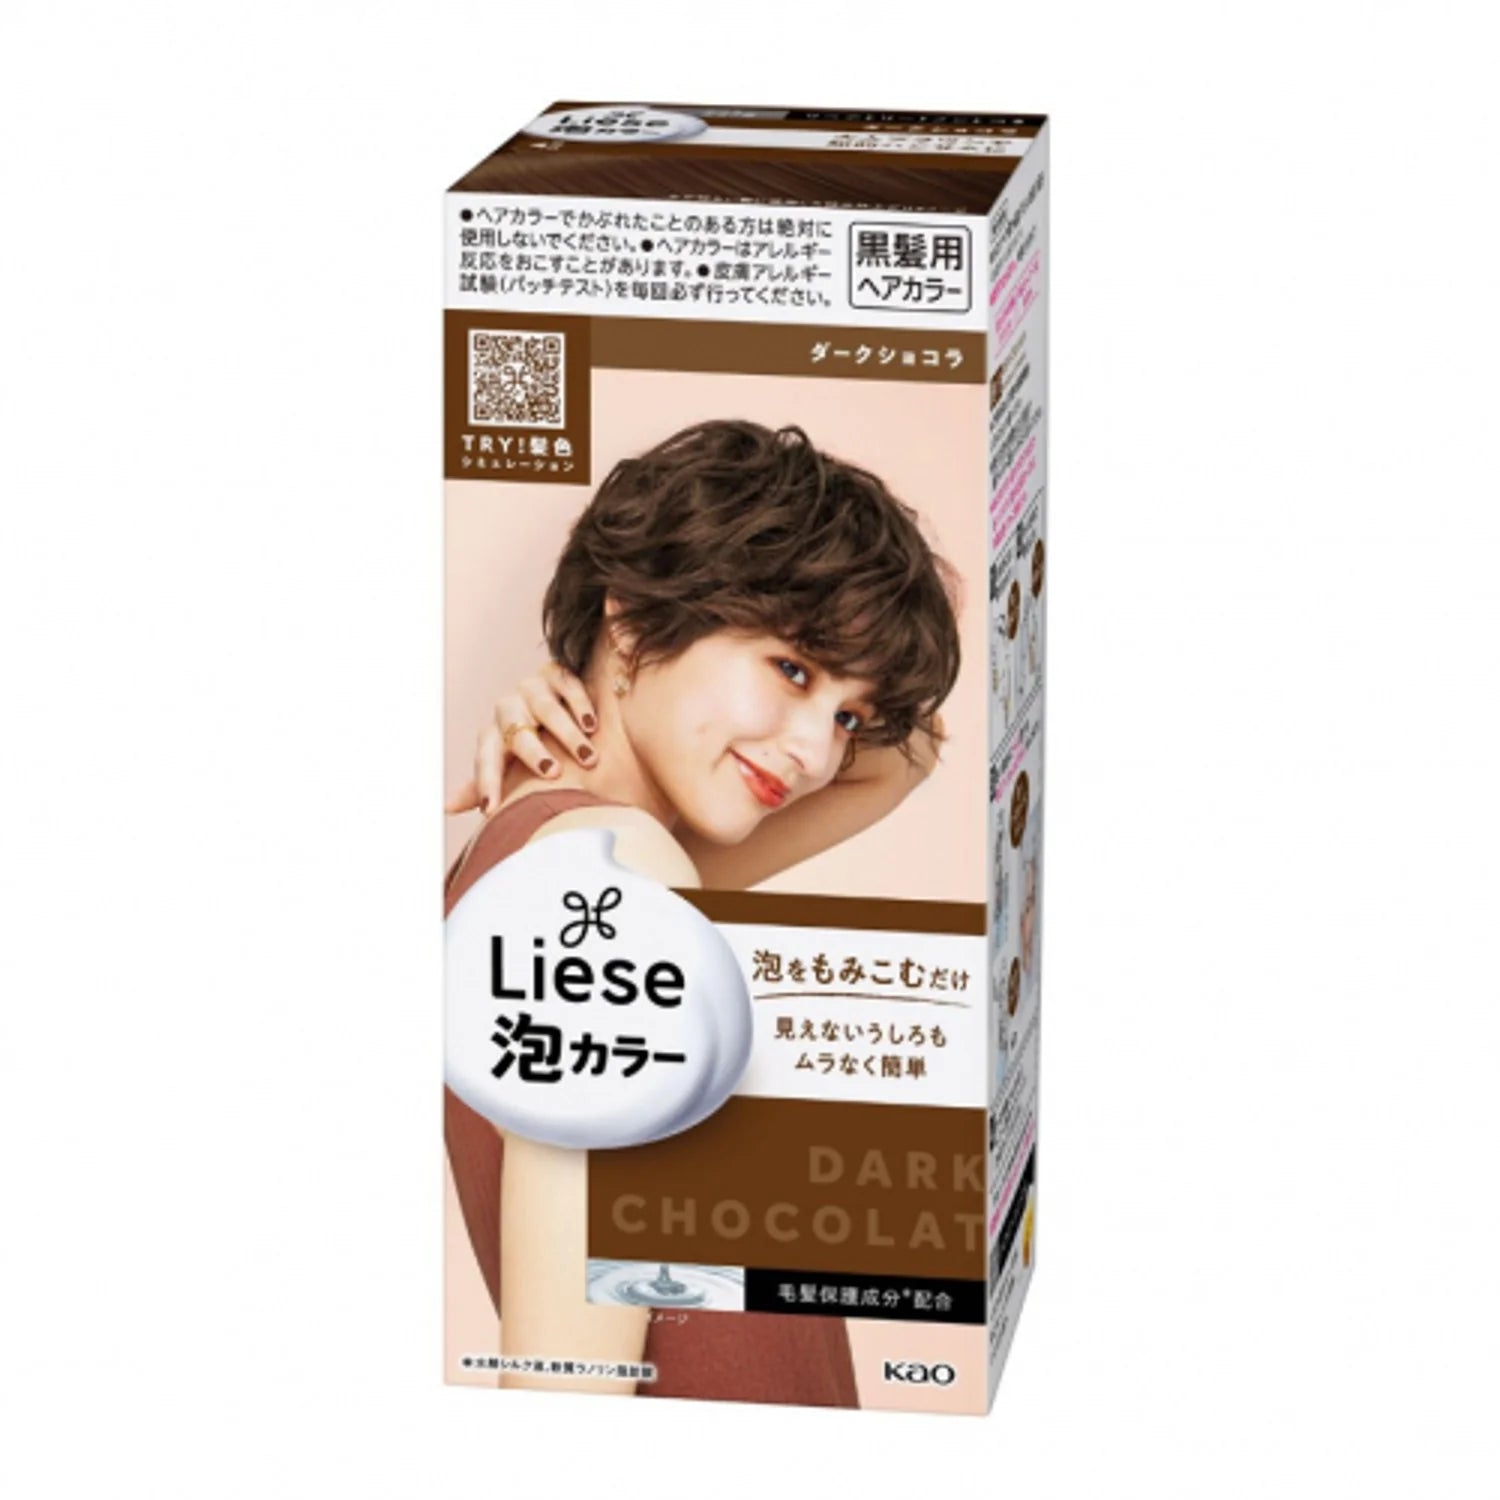 Liese Creamy Bubble Hair Color Dark Chocolate